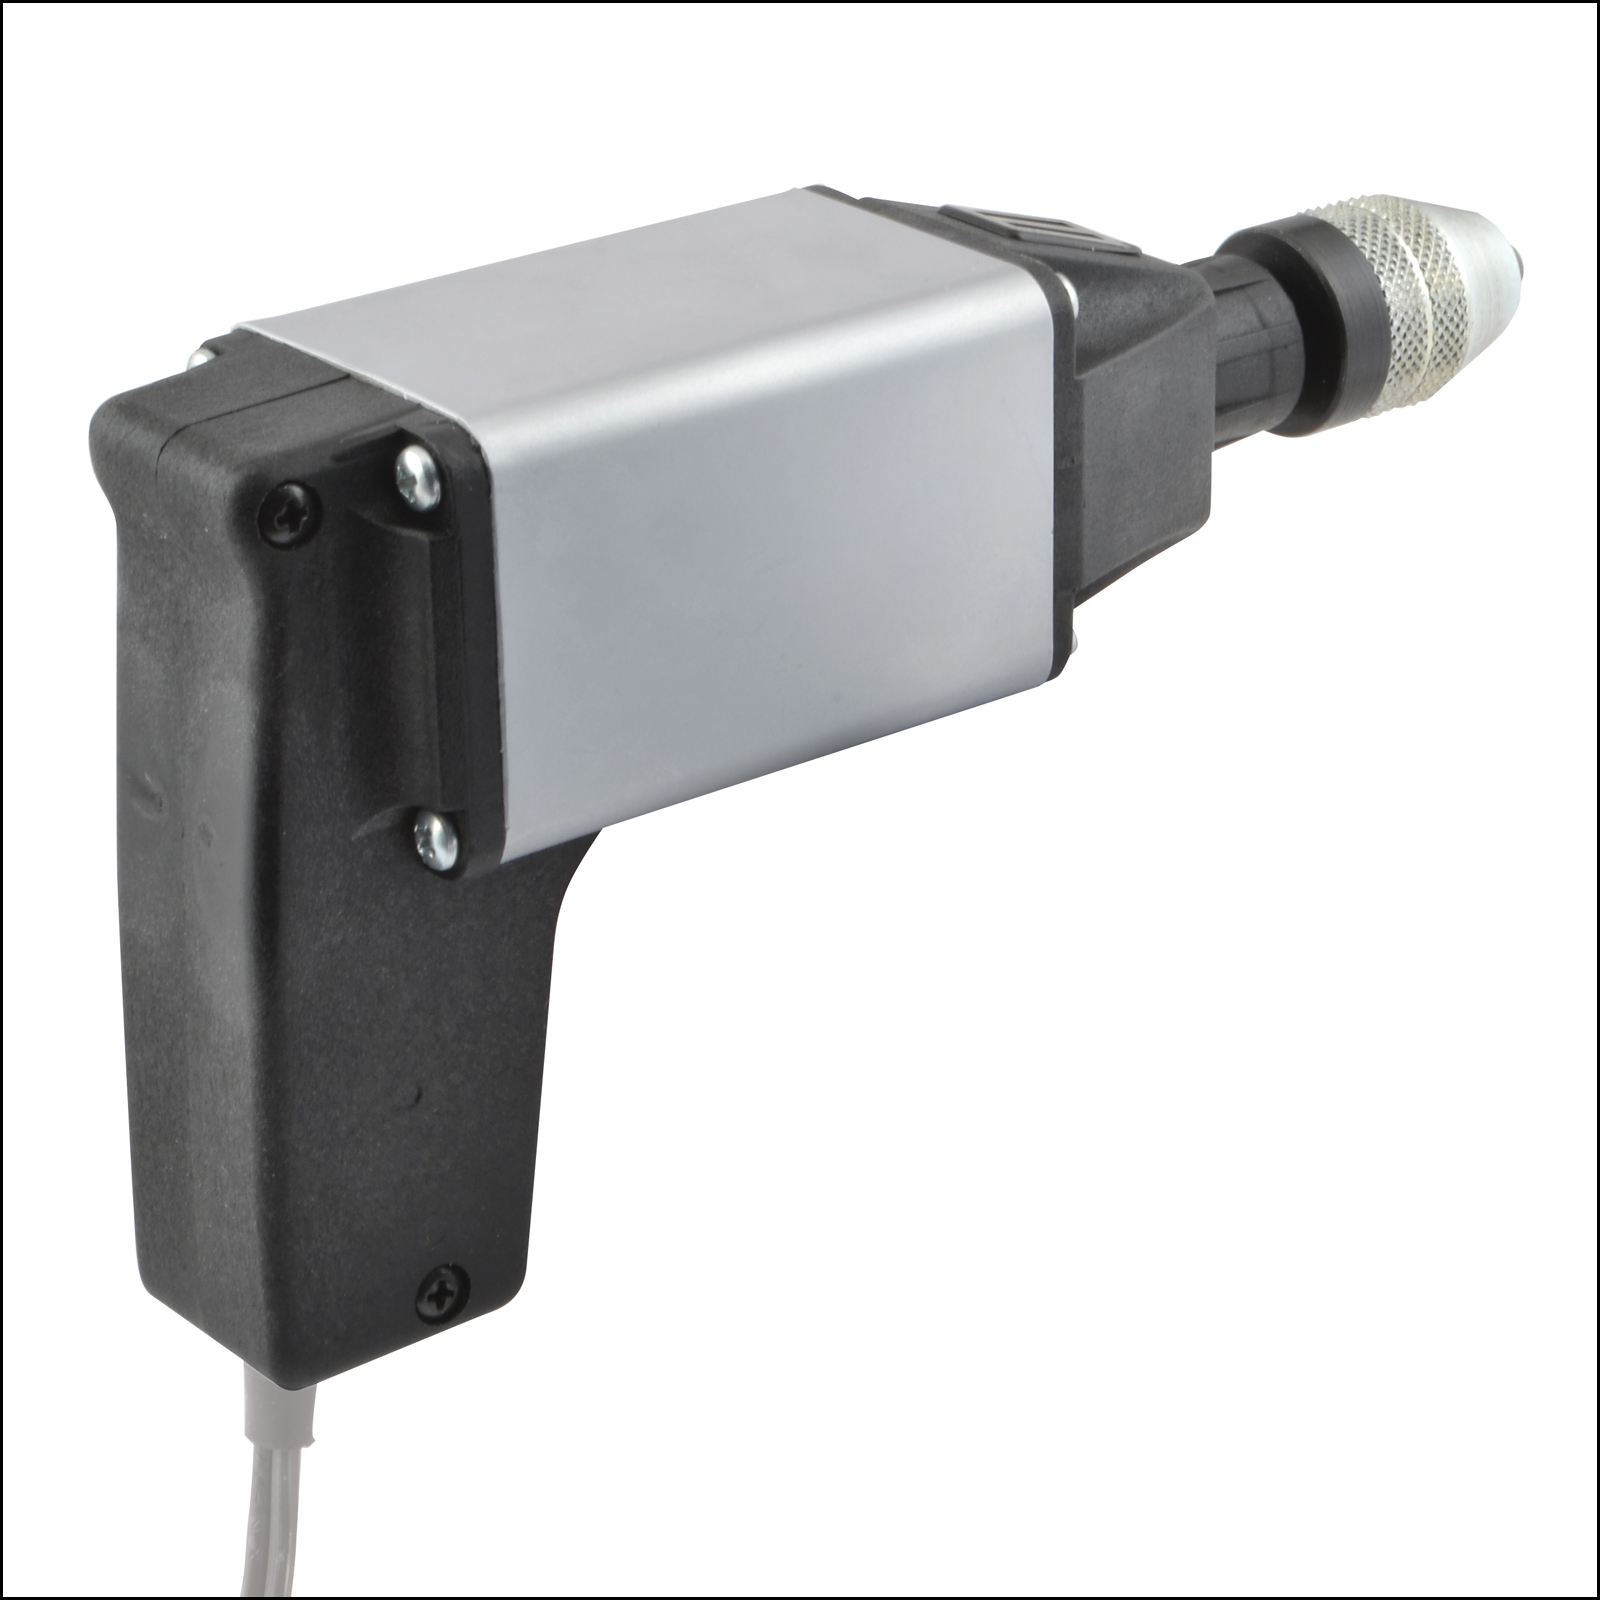 Microlux 7 in. 3-Speed High-Torque Mini Drill Press